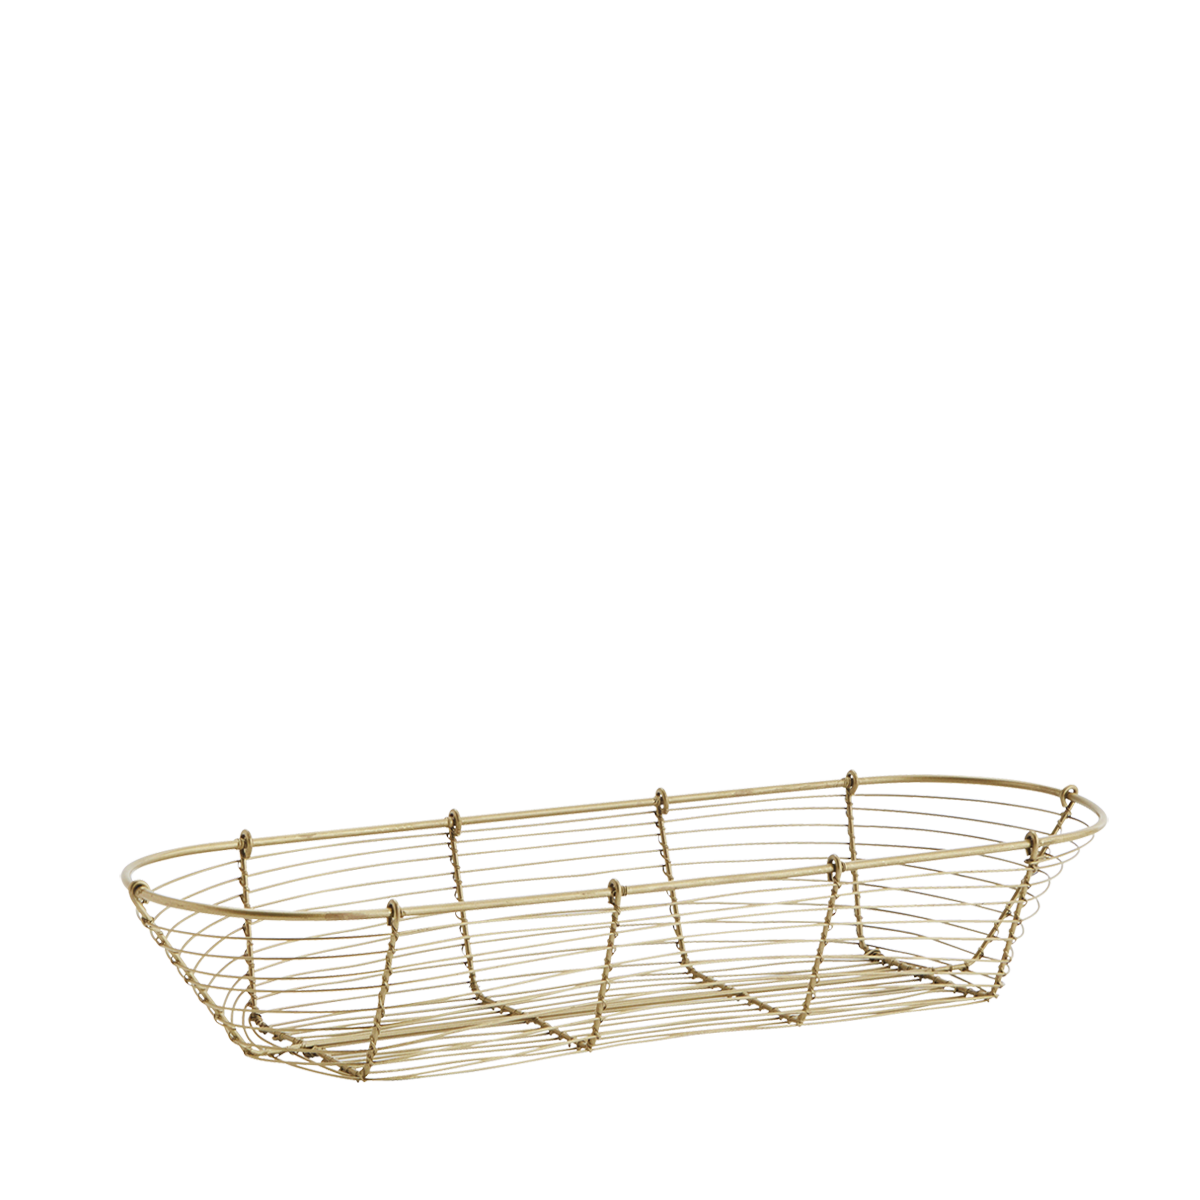 Oval iron basket